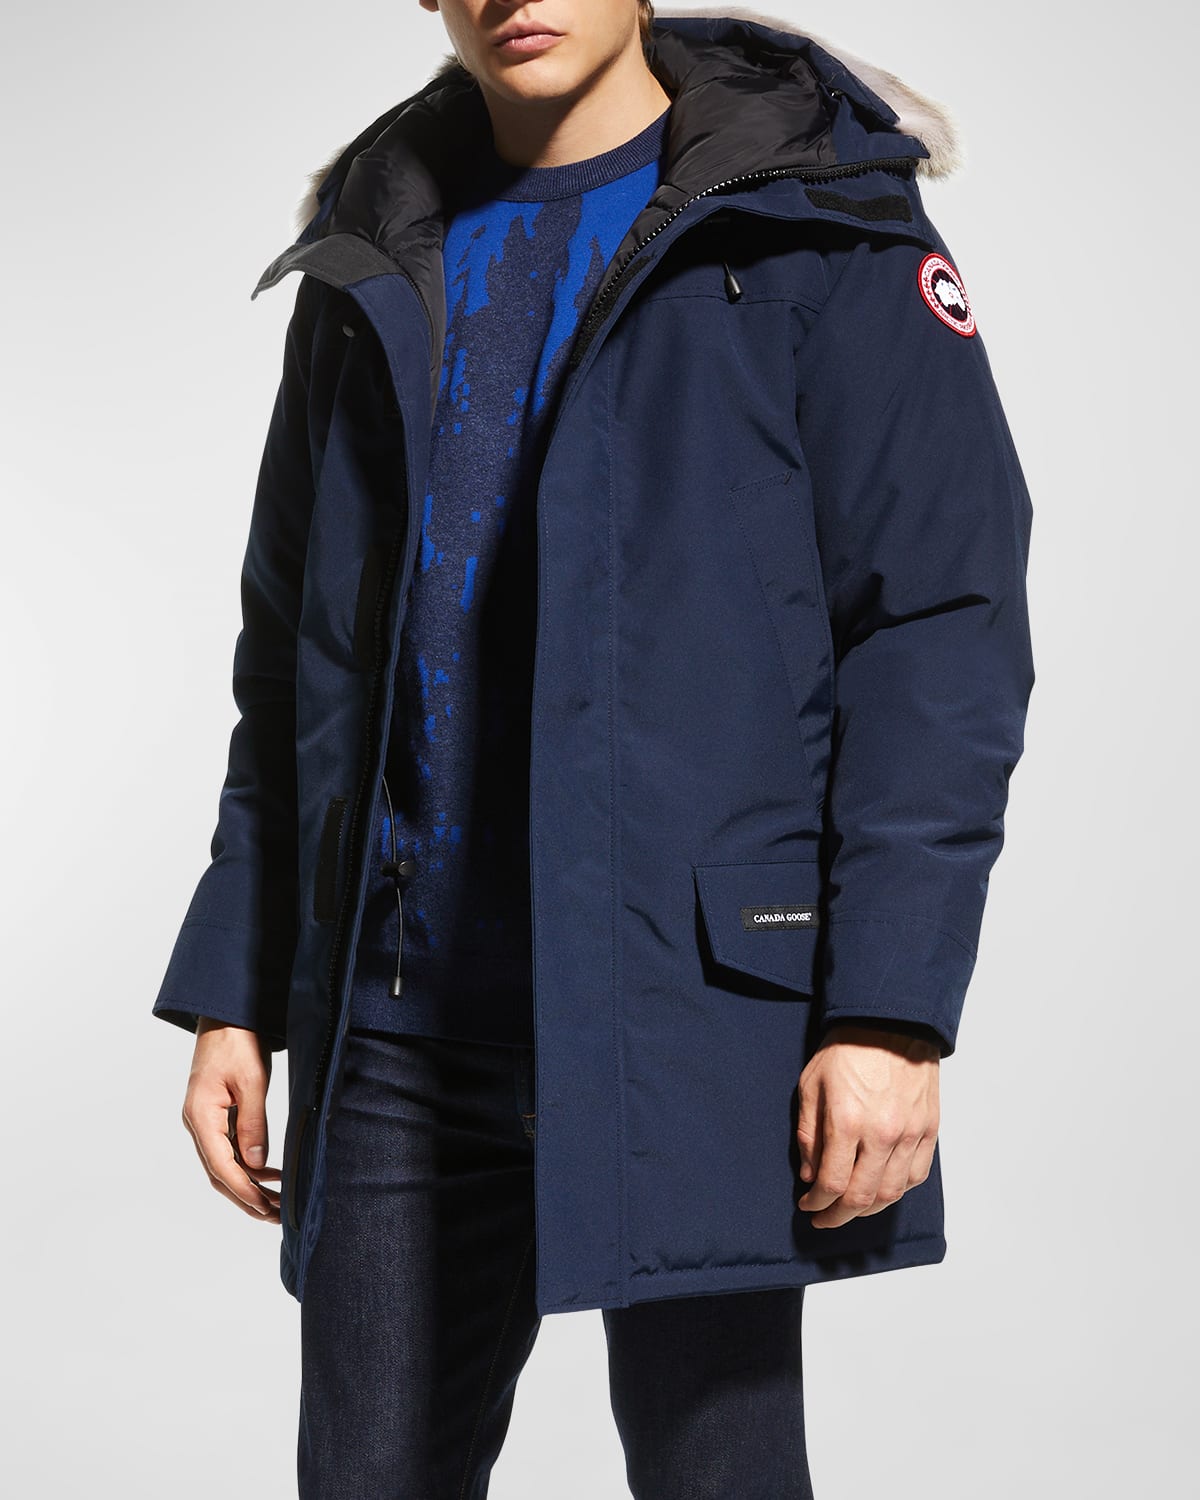 Canada Goose Men's Langford Arctic-Tech Parka Jacket with Fur Hood